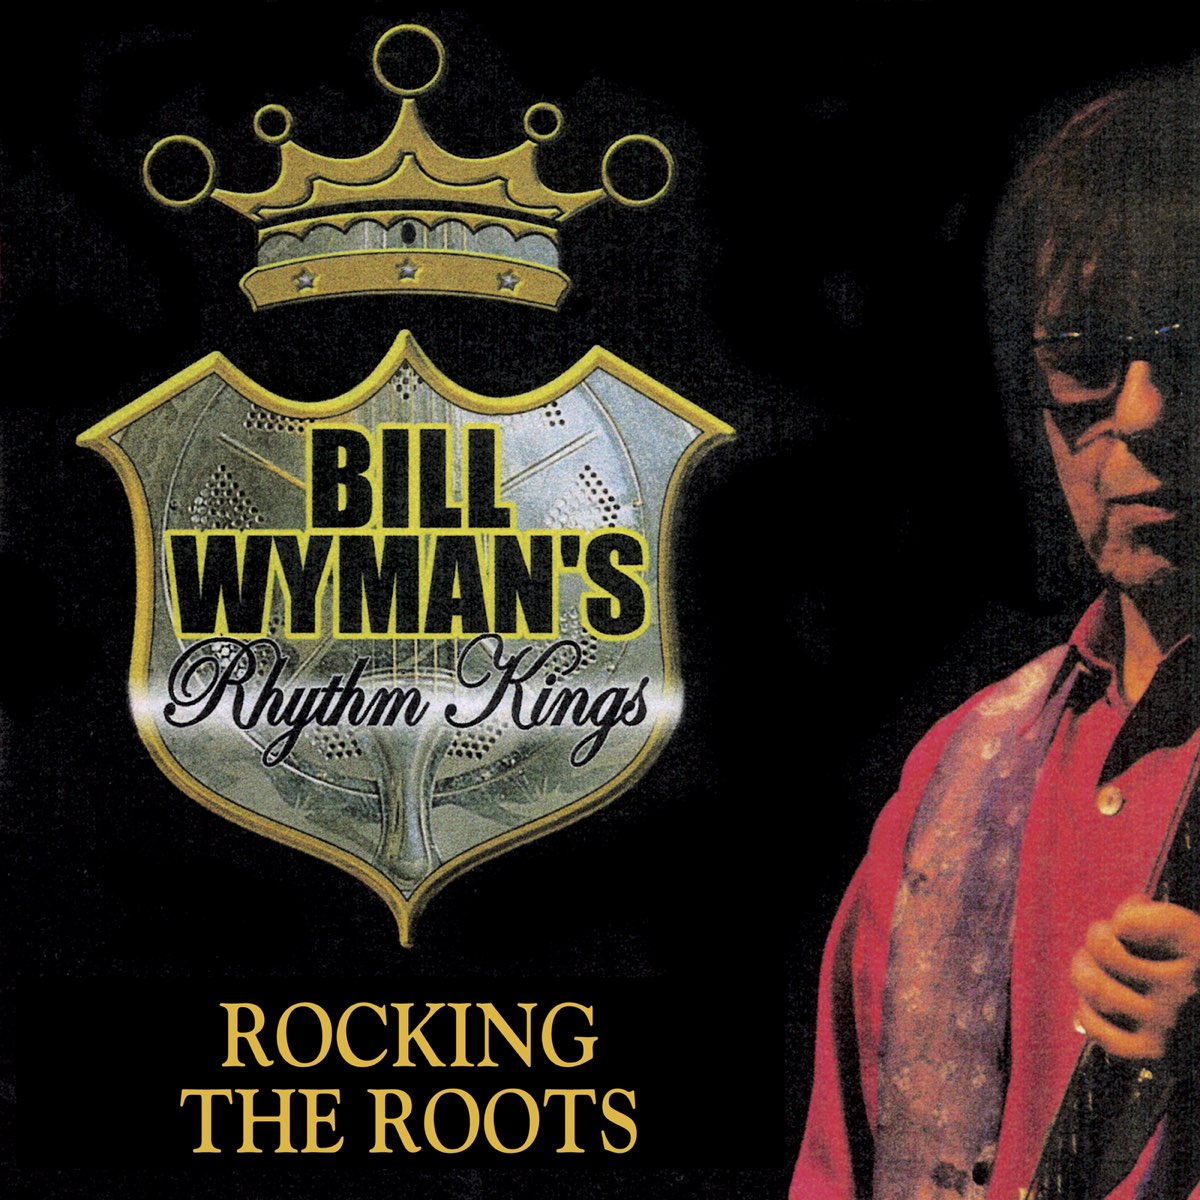 Короли рока слушать. Bill Wyman's Rhythm Kings. Bill Wyman's Rhythm Kings - Rocking the roots (2017). Билла Bill Wyman's Rhythm Kings (1997). Wyman Bill "Bill Wyman".